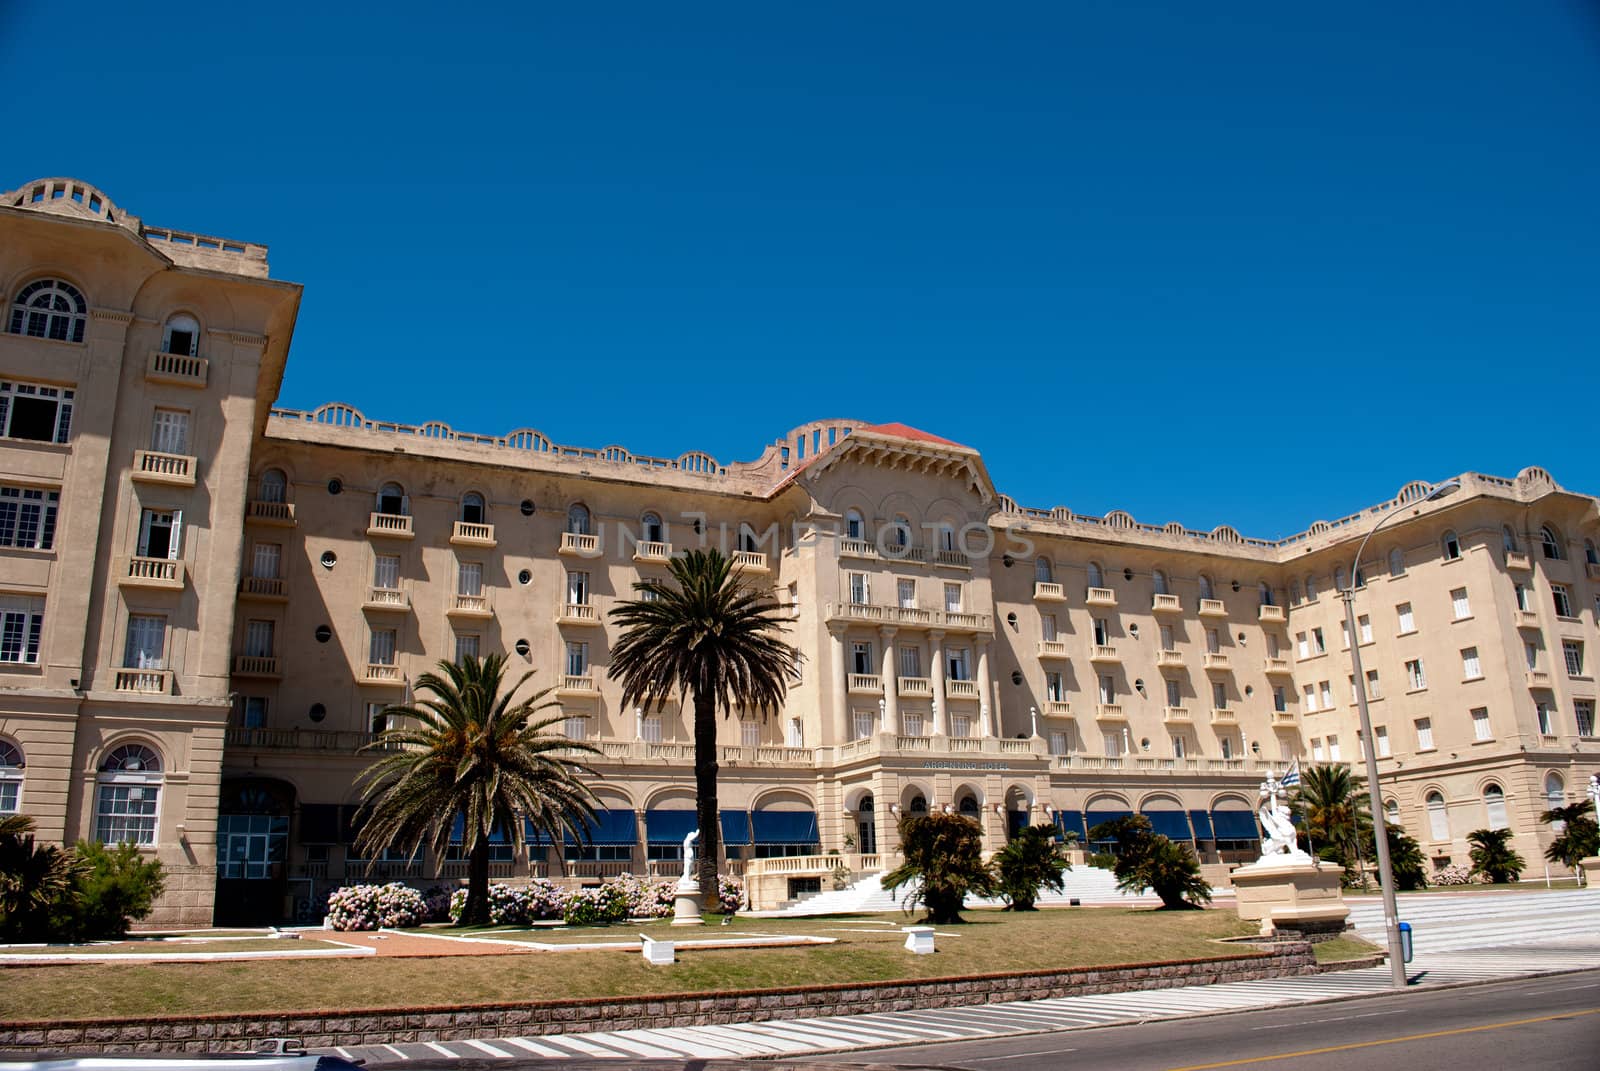 Argentine hotel, Uruguay